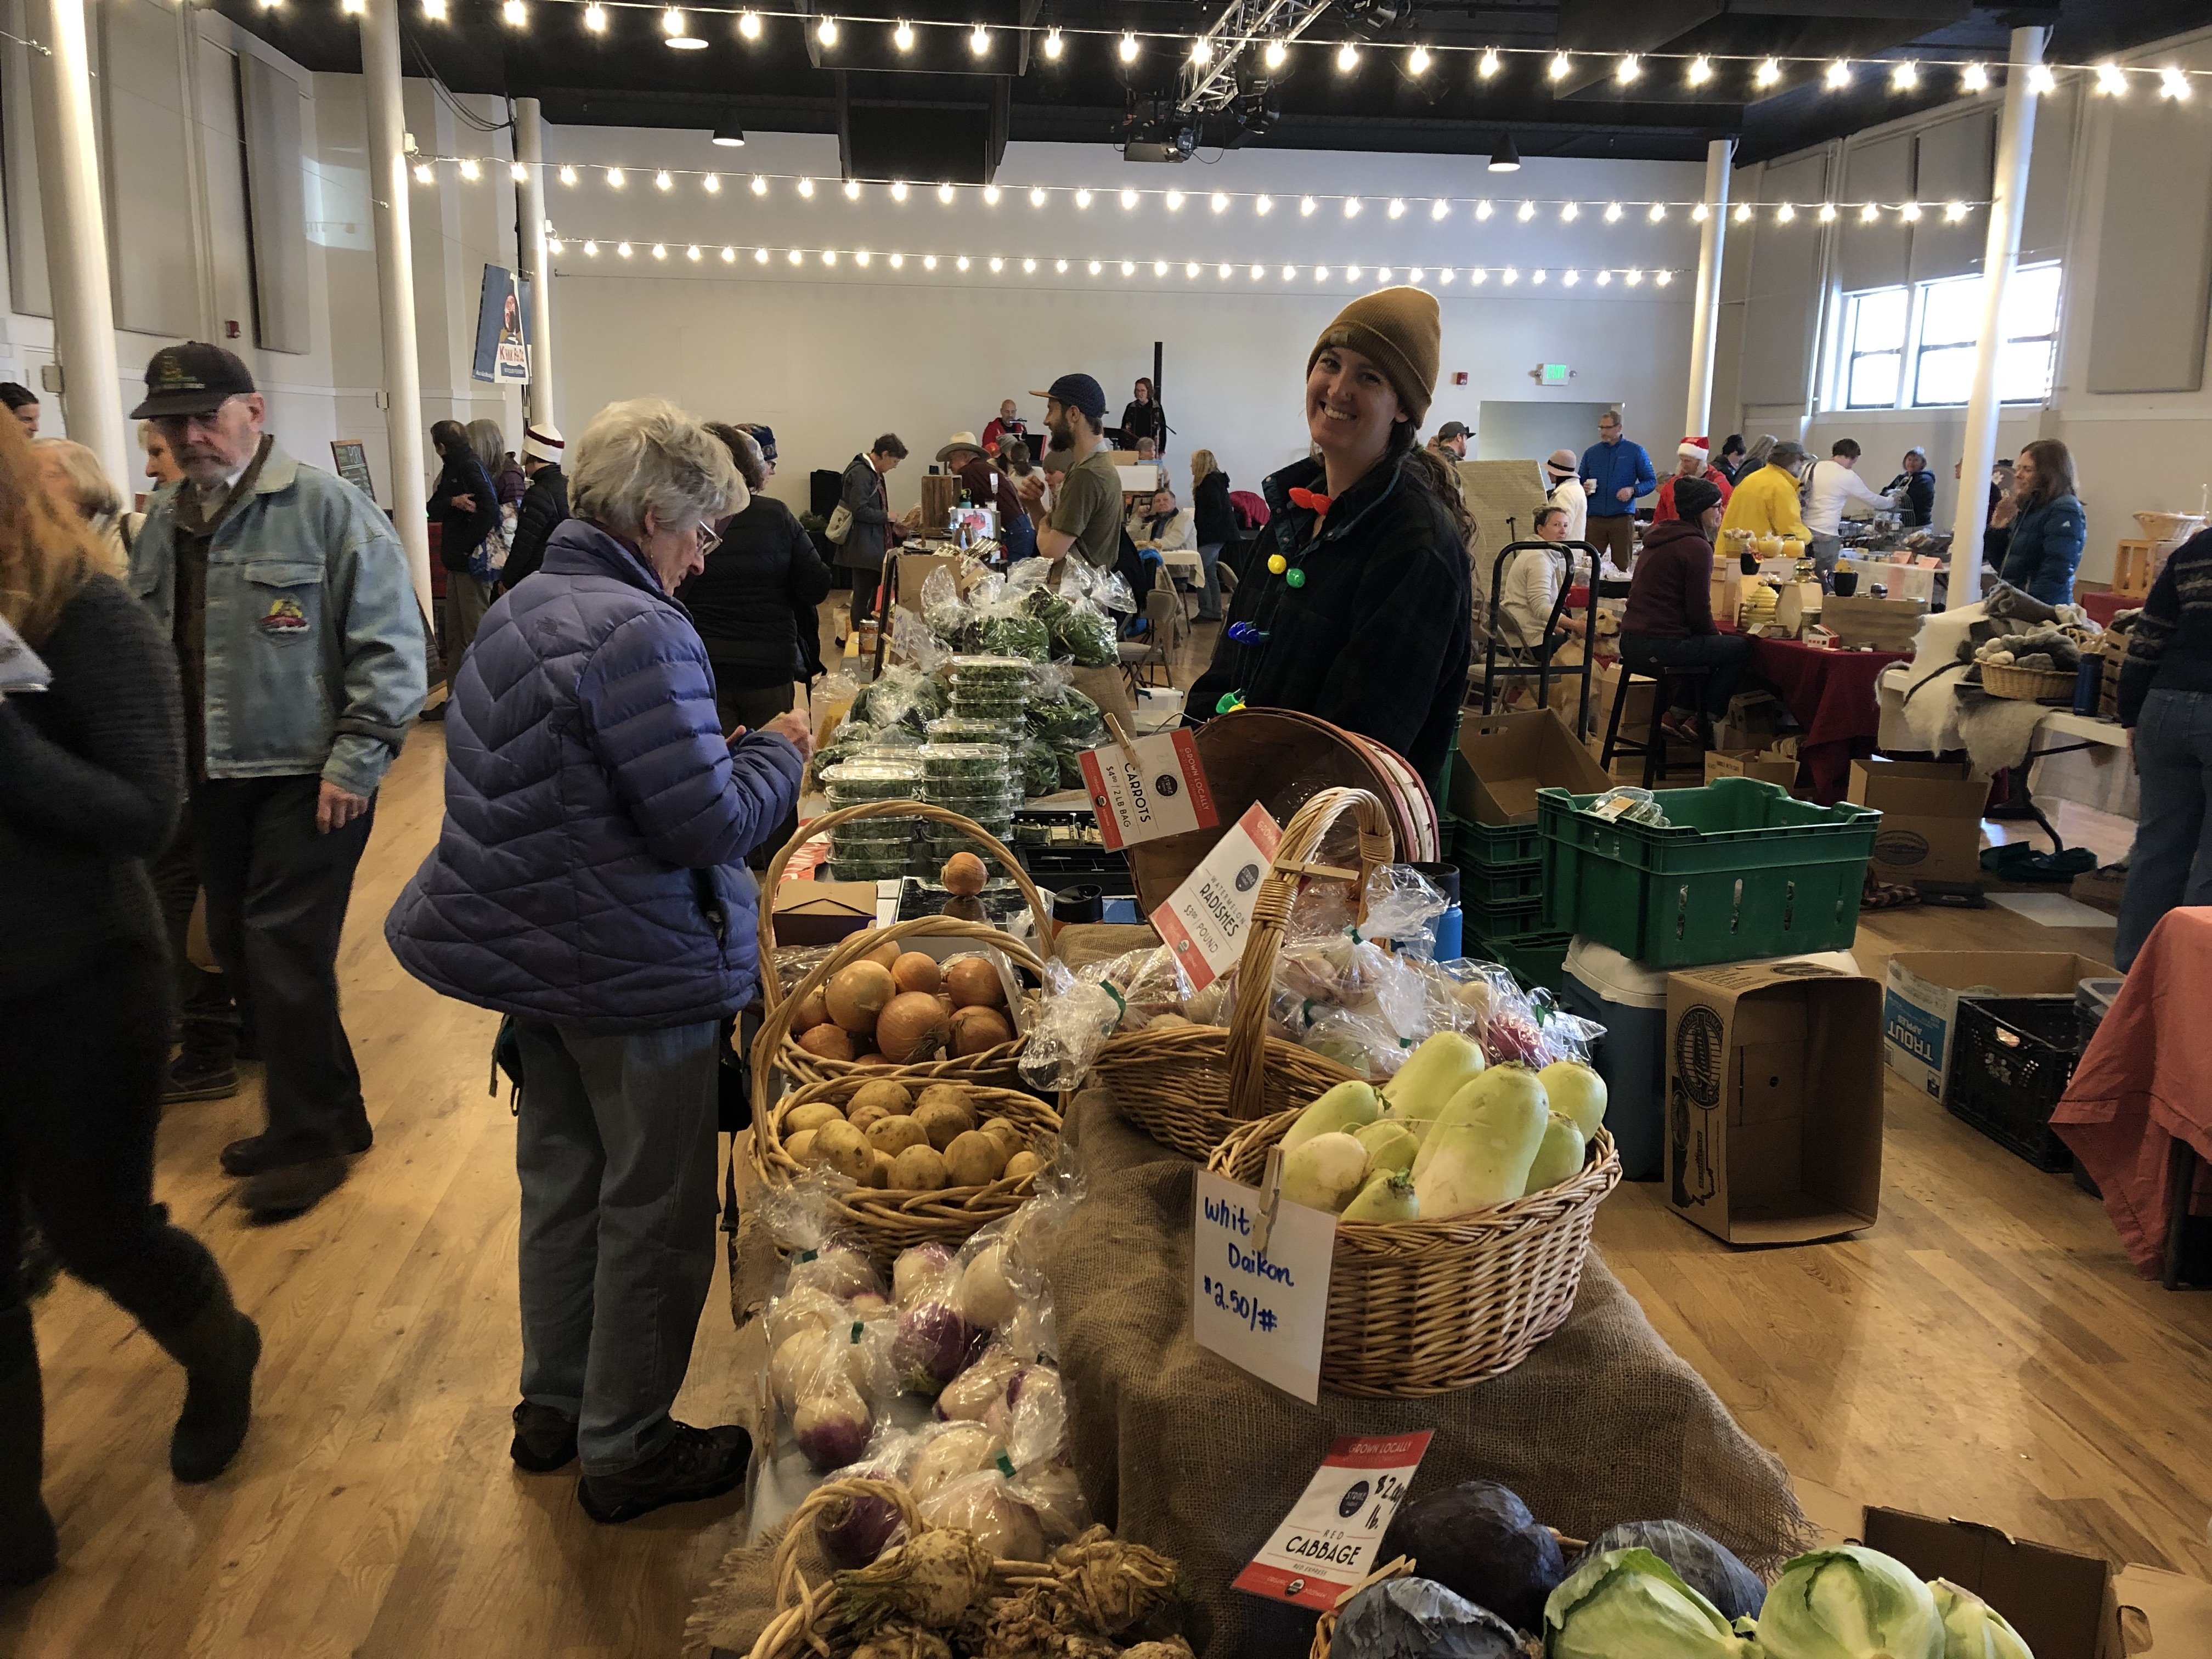 Previous Happening: Bozeman Winter Farmer's Market Fundraiser